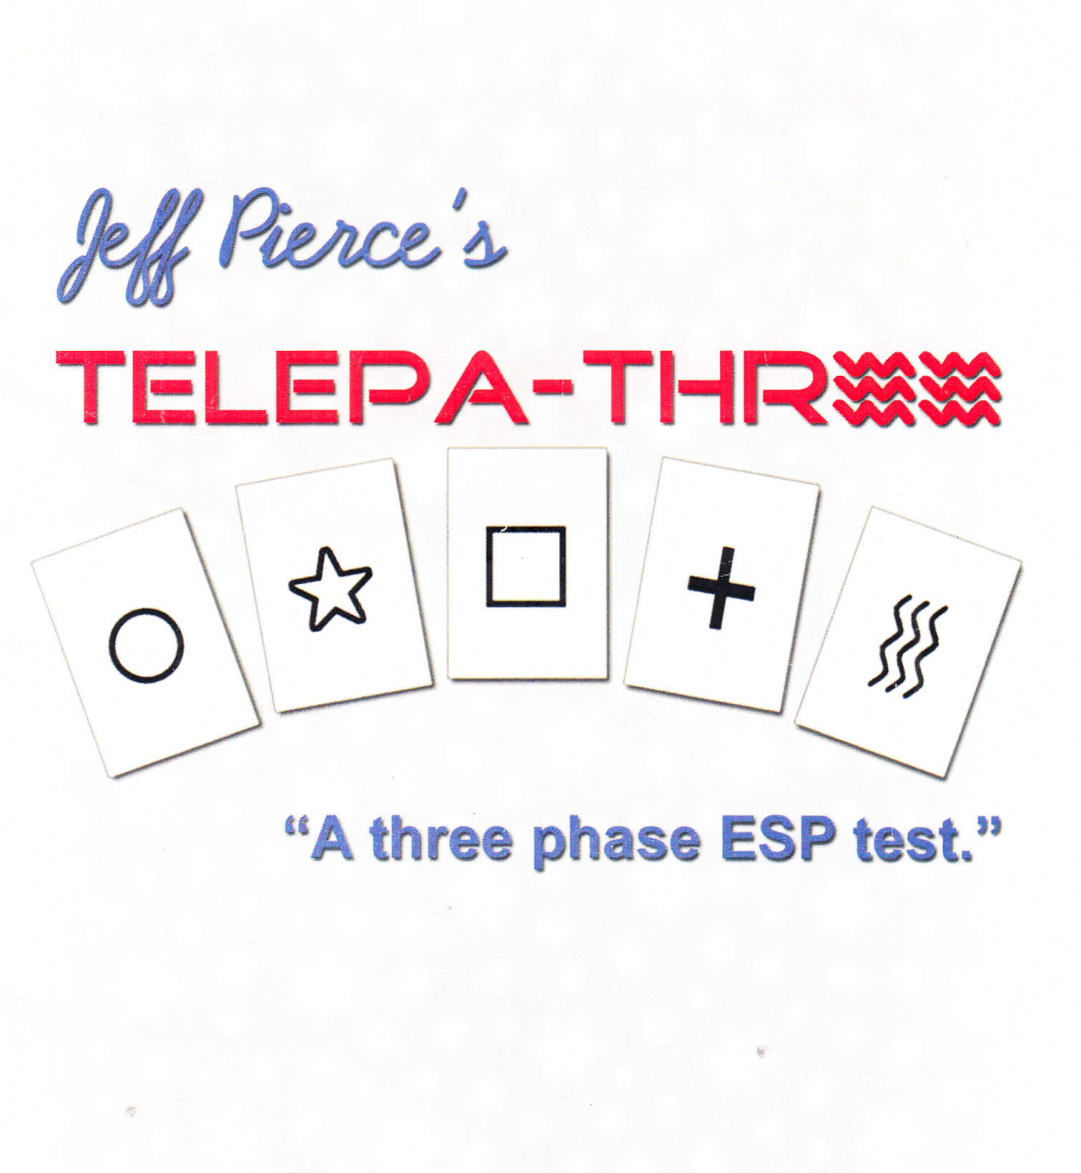 Jeff Pierce - Telepa-Three